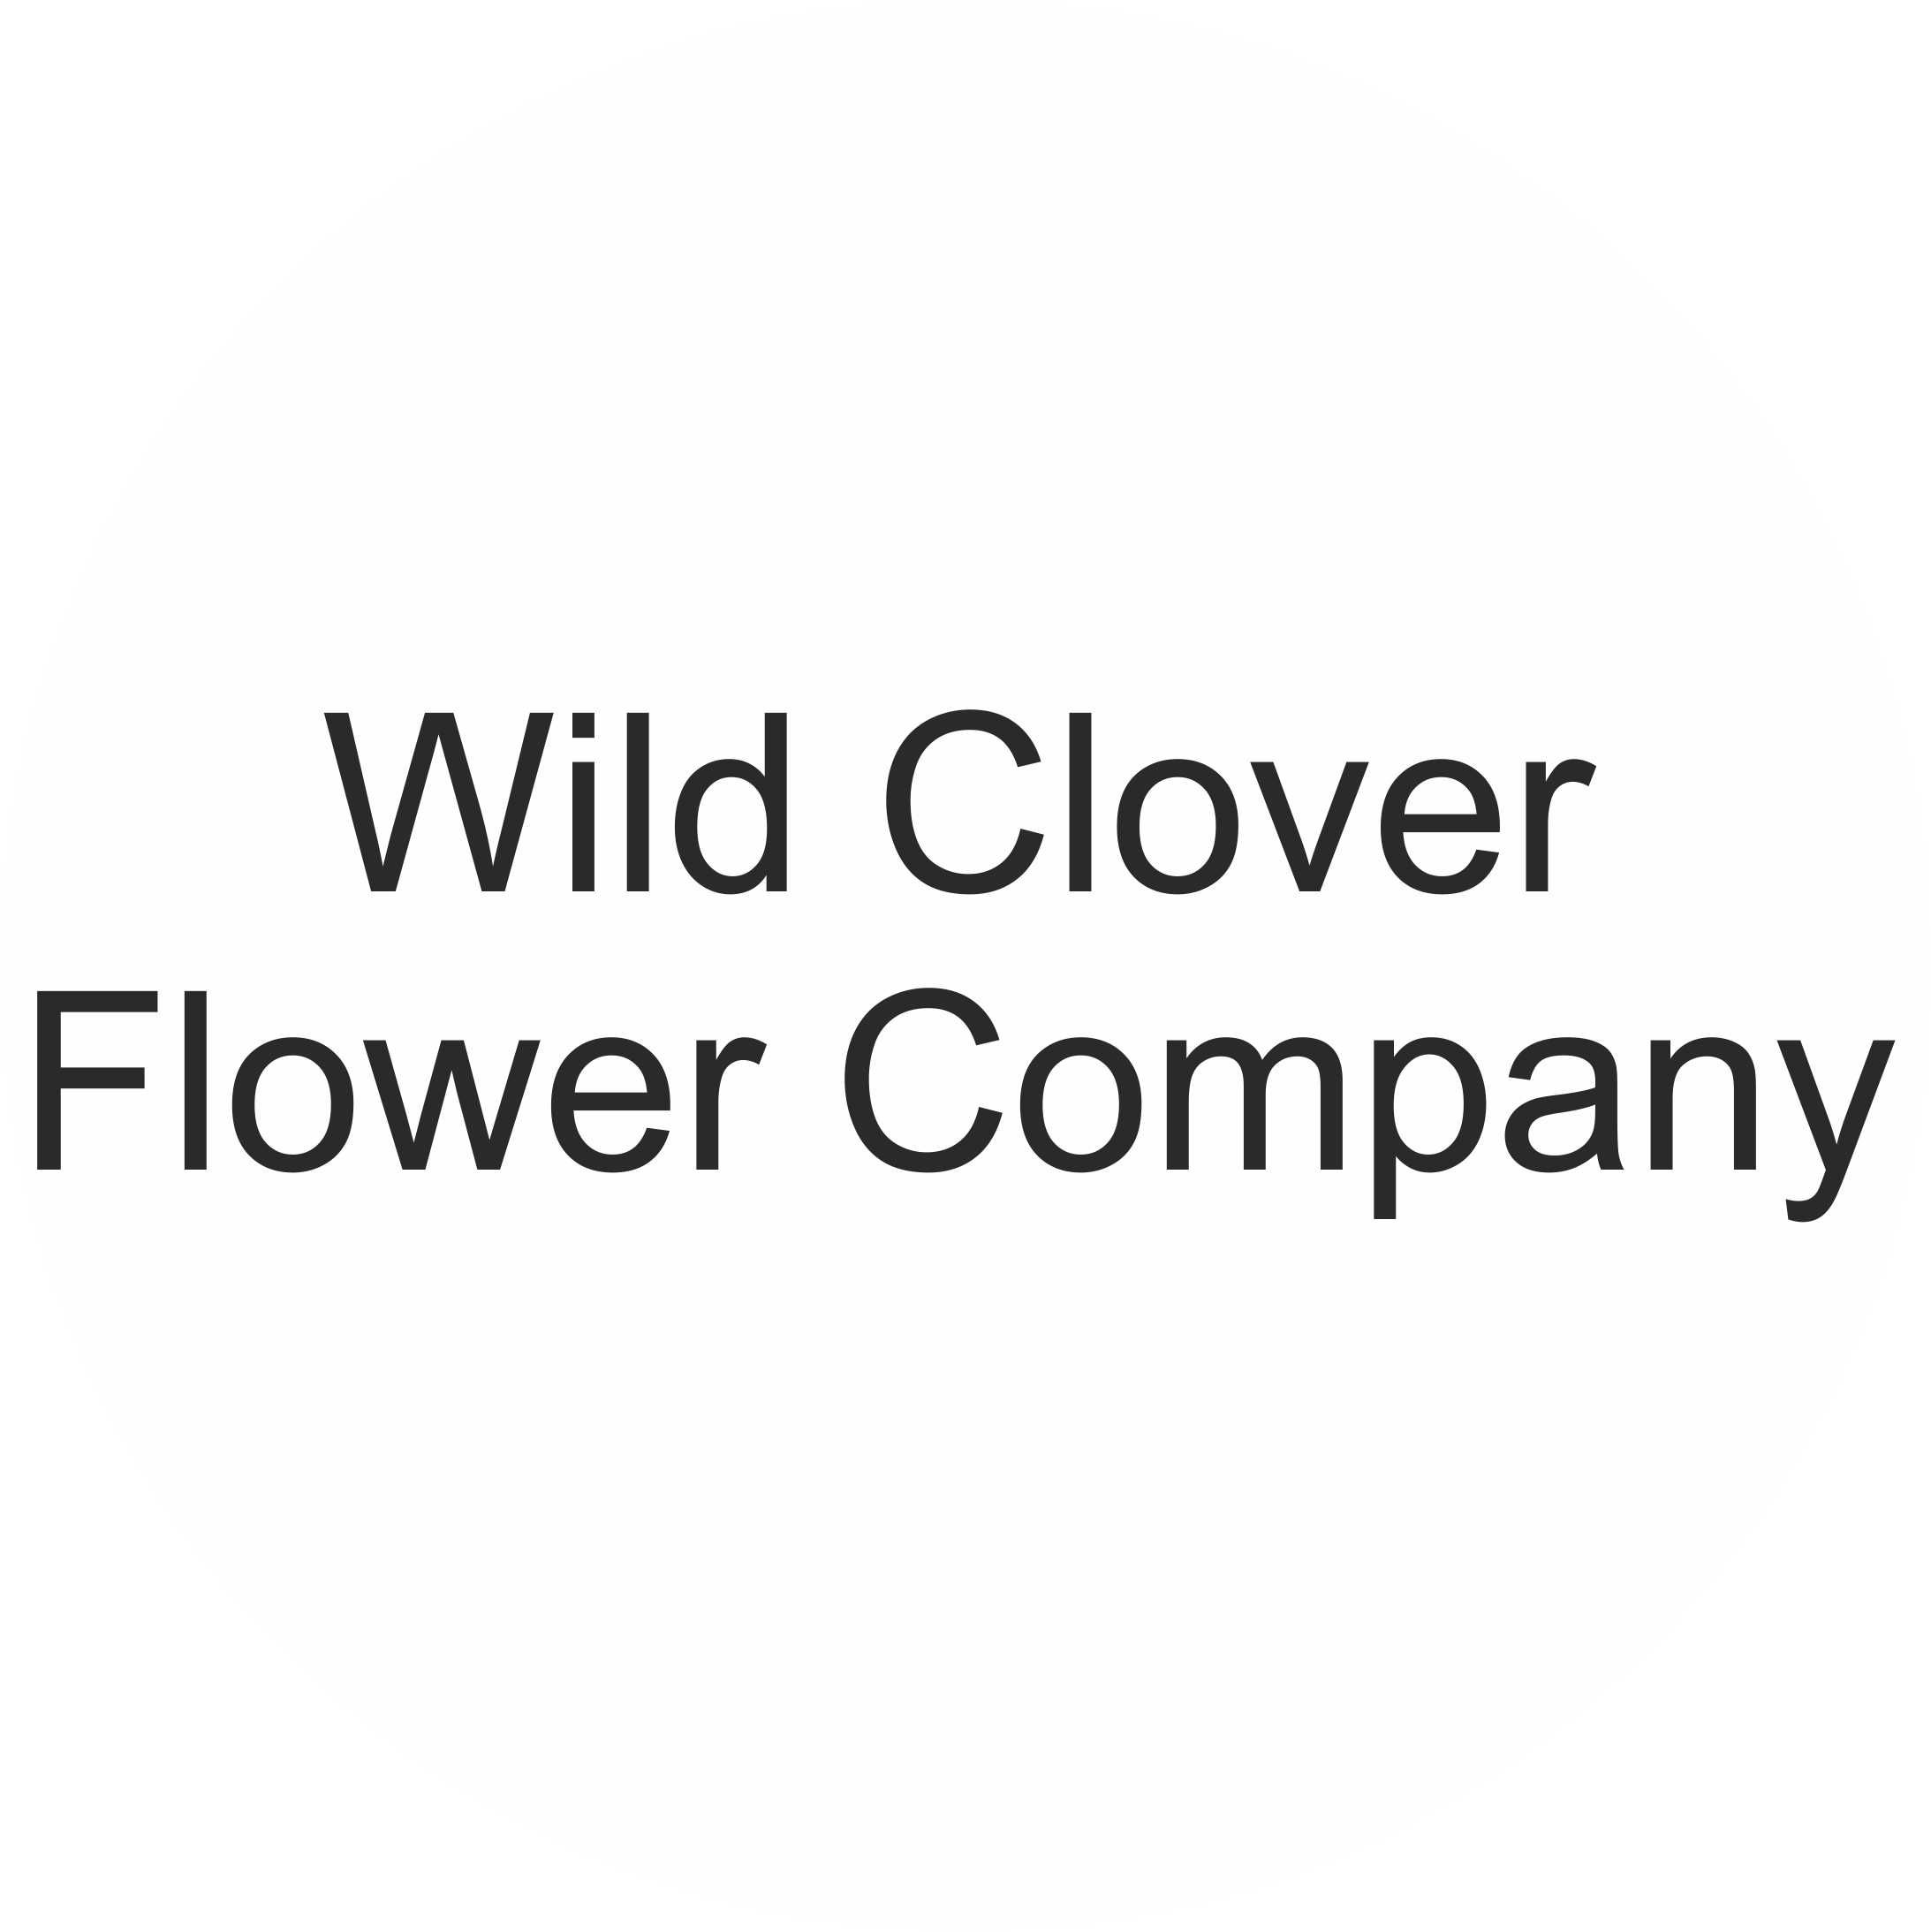 Alison Clover- Wild Clover Flower Company